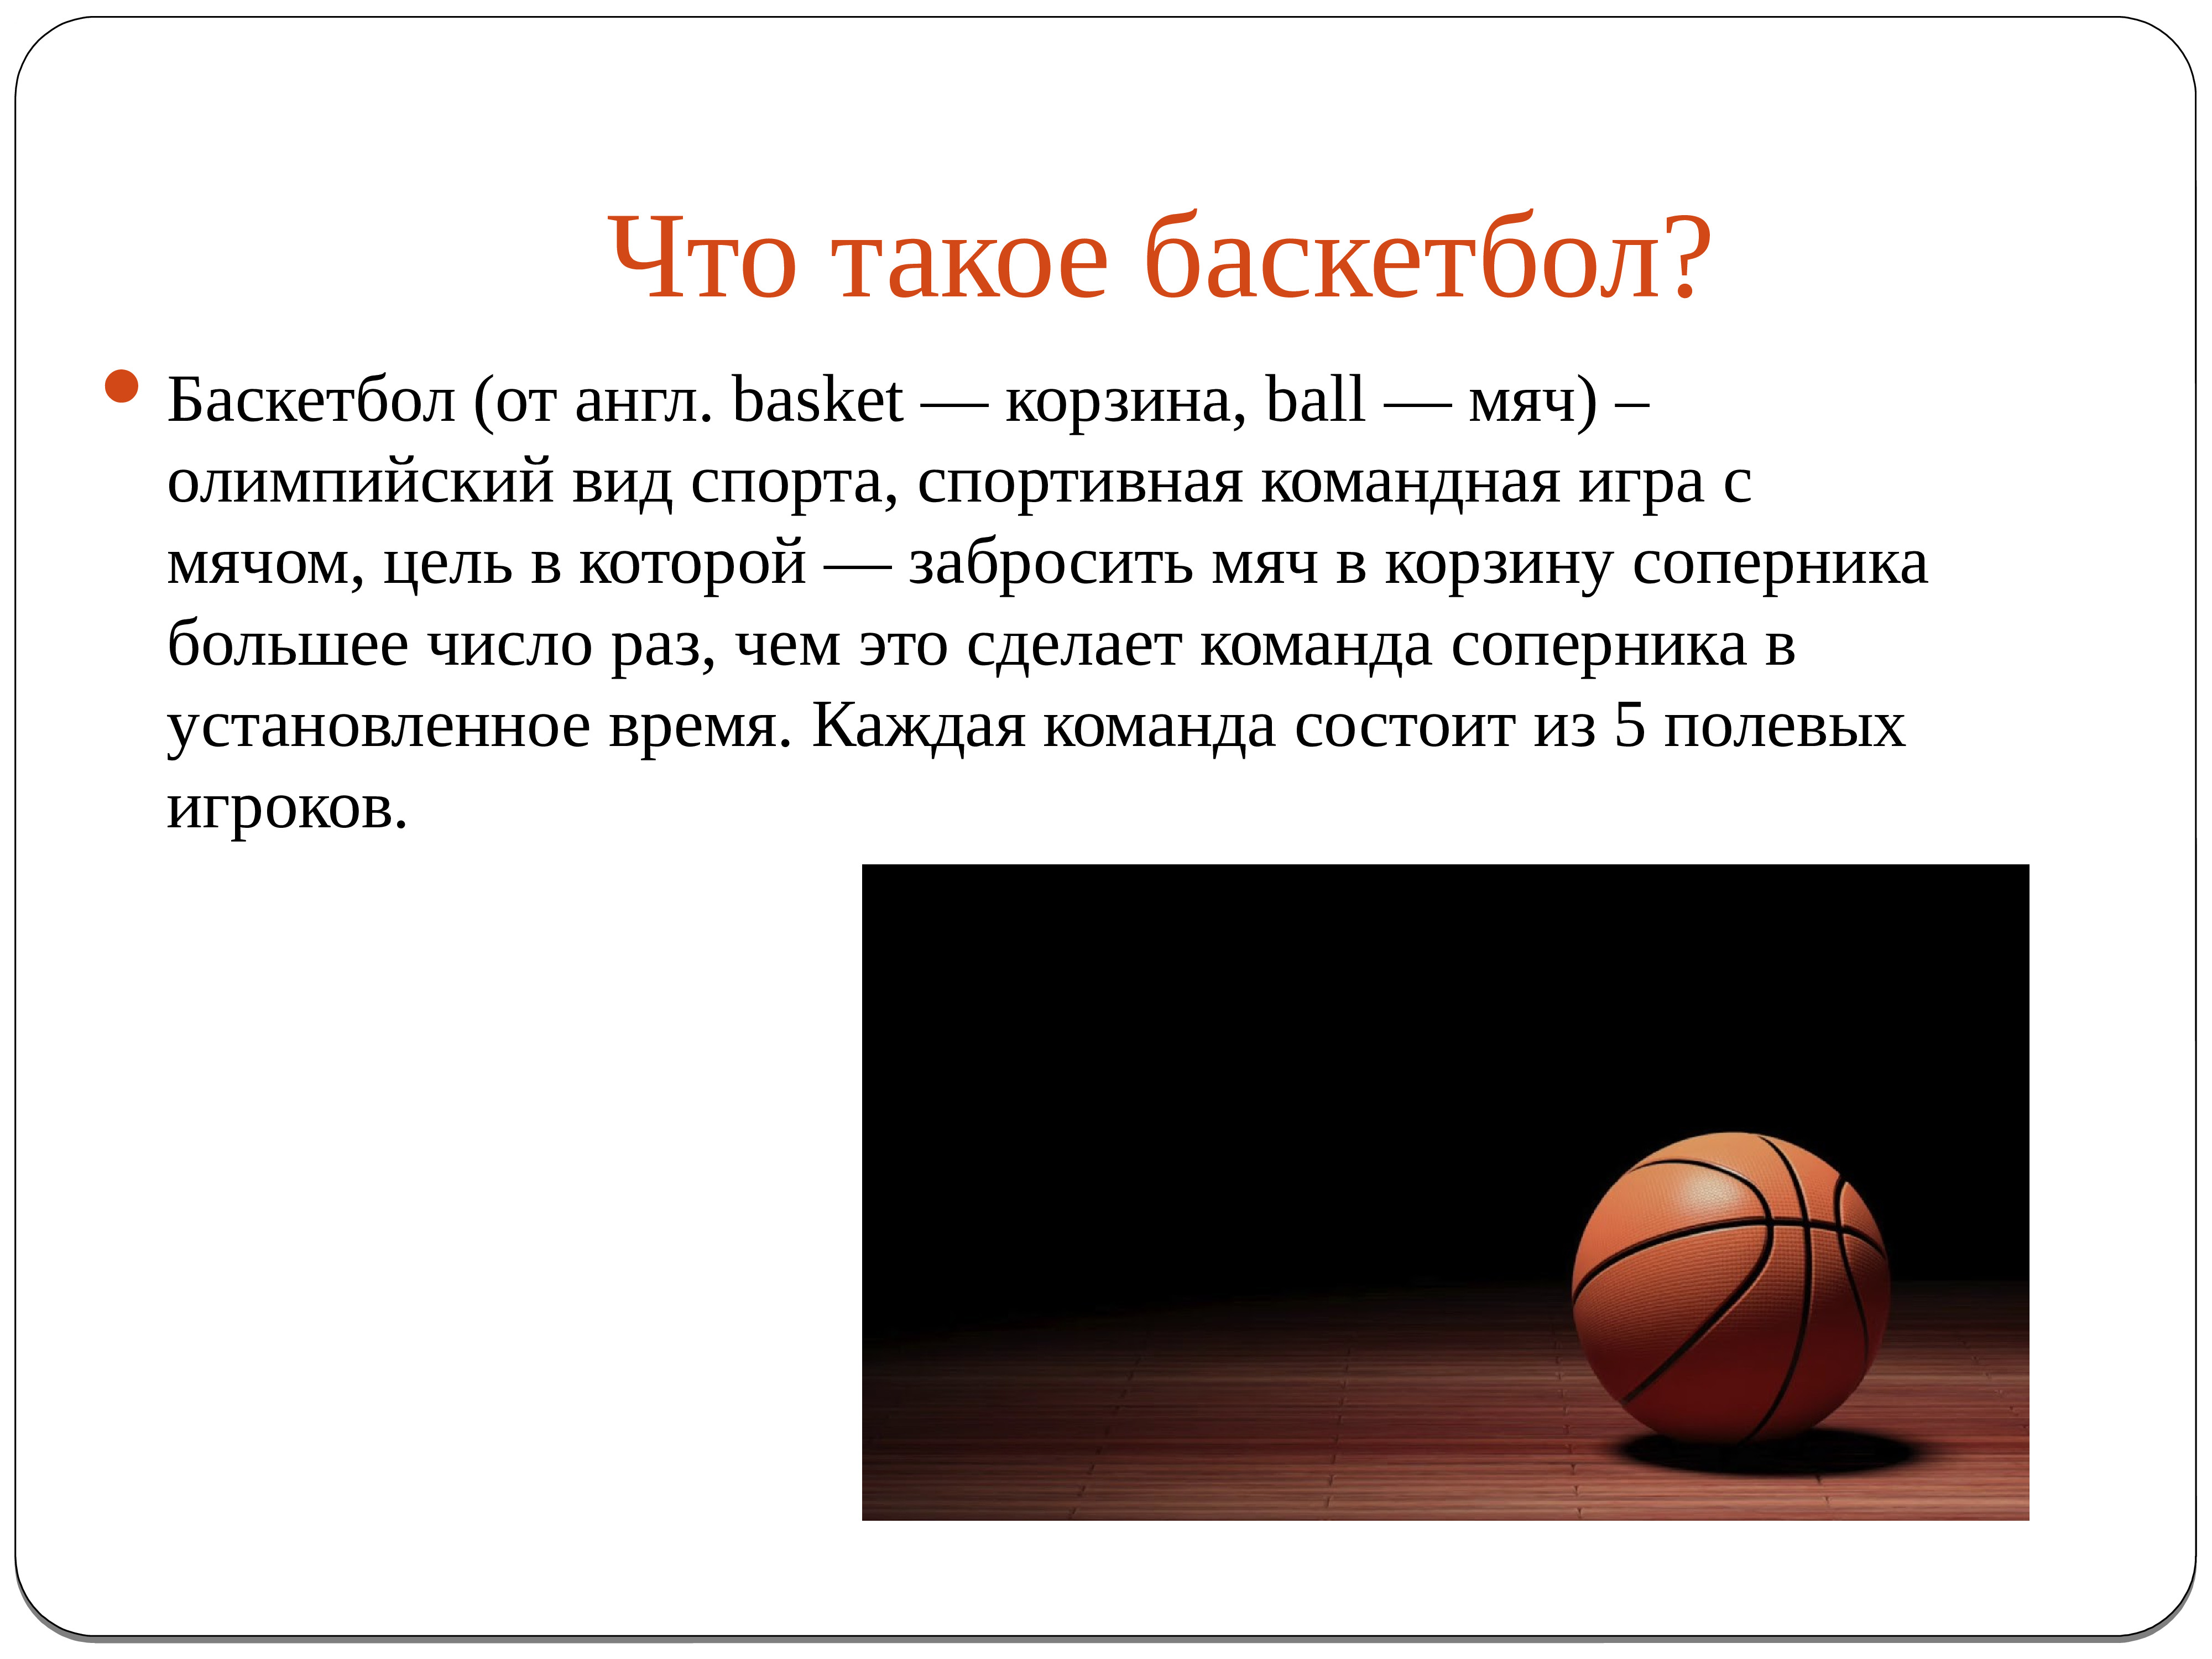 Баскетбол история и правила игры. Баскетбол презентация. История развития баскетбола презентация. Баскетбол конспект. Баскетбол дети для презентации.